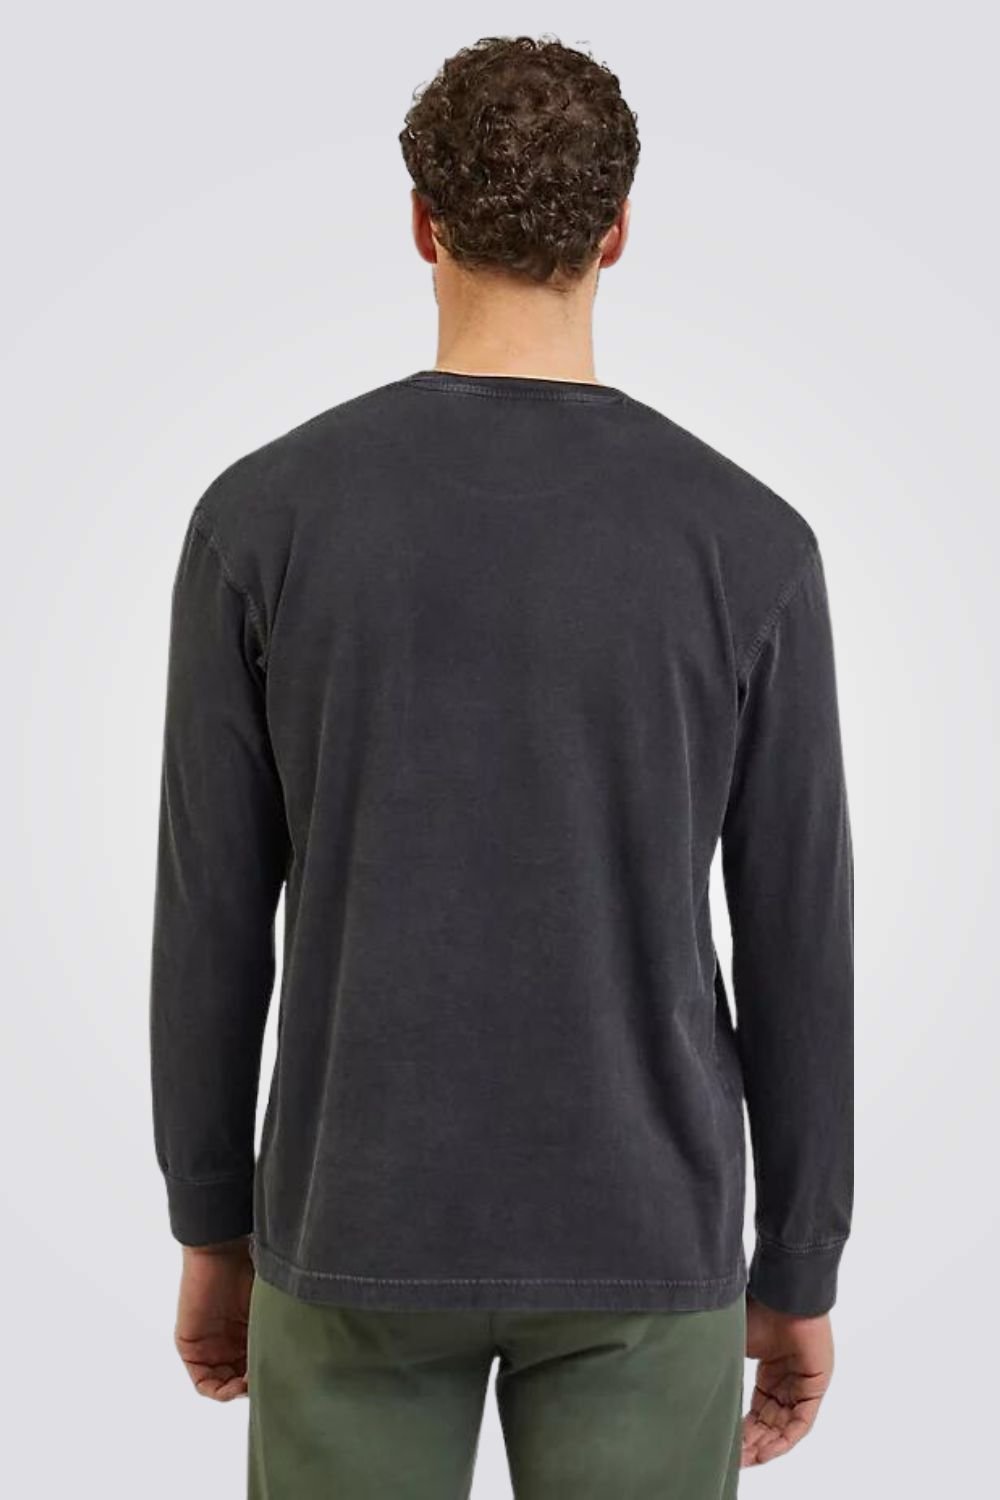 LEE - חולצה ארוכה לגברים LS POCKET בצבע שחור - MASHBIR//365